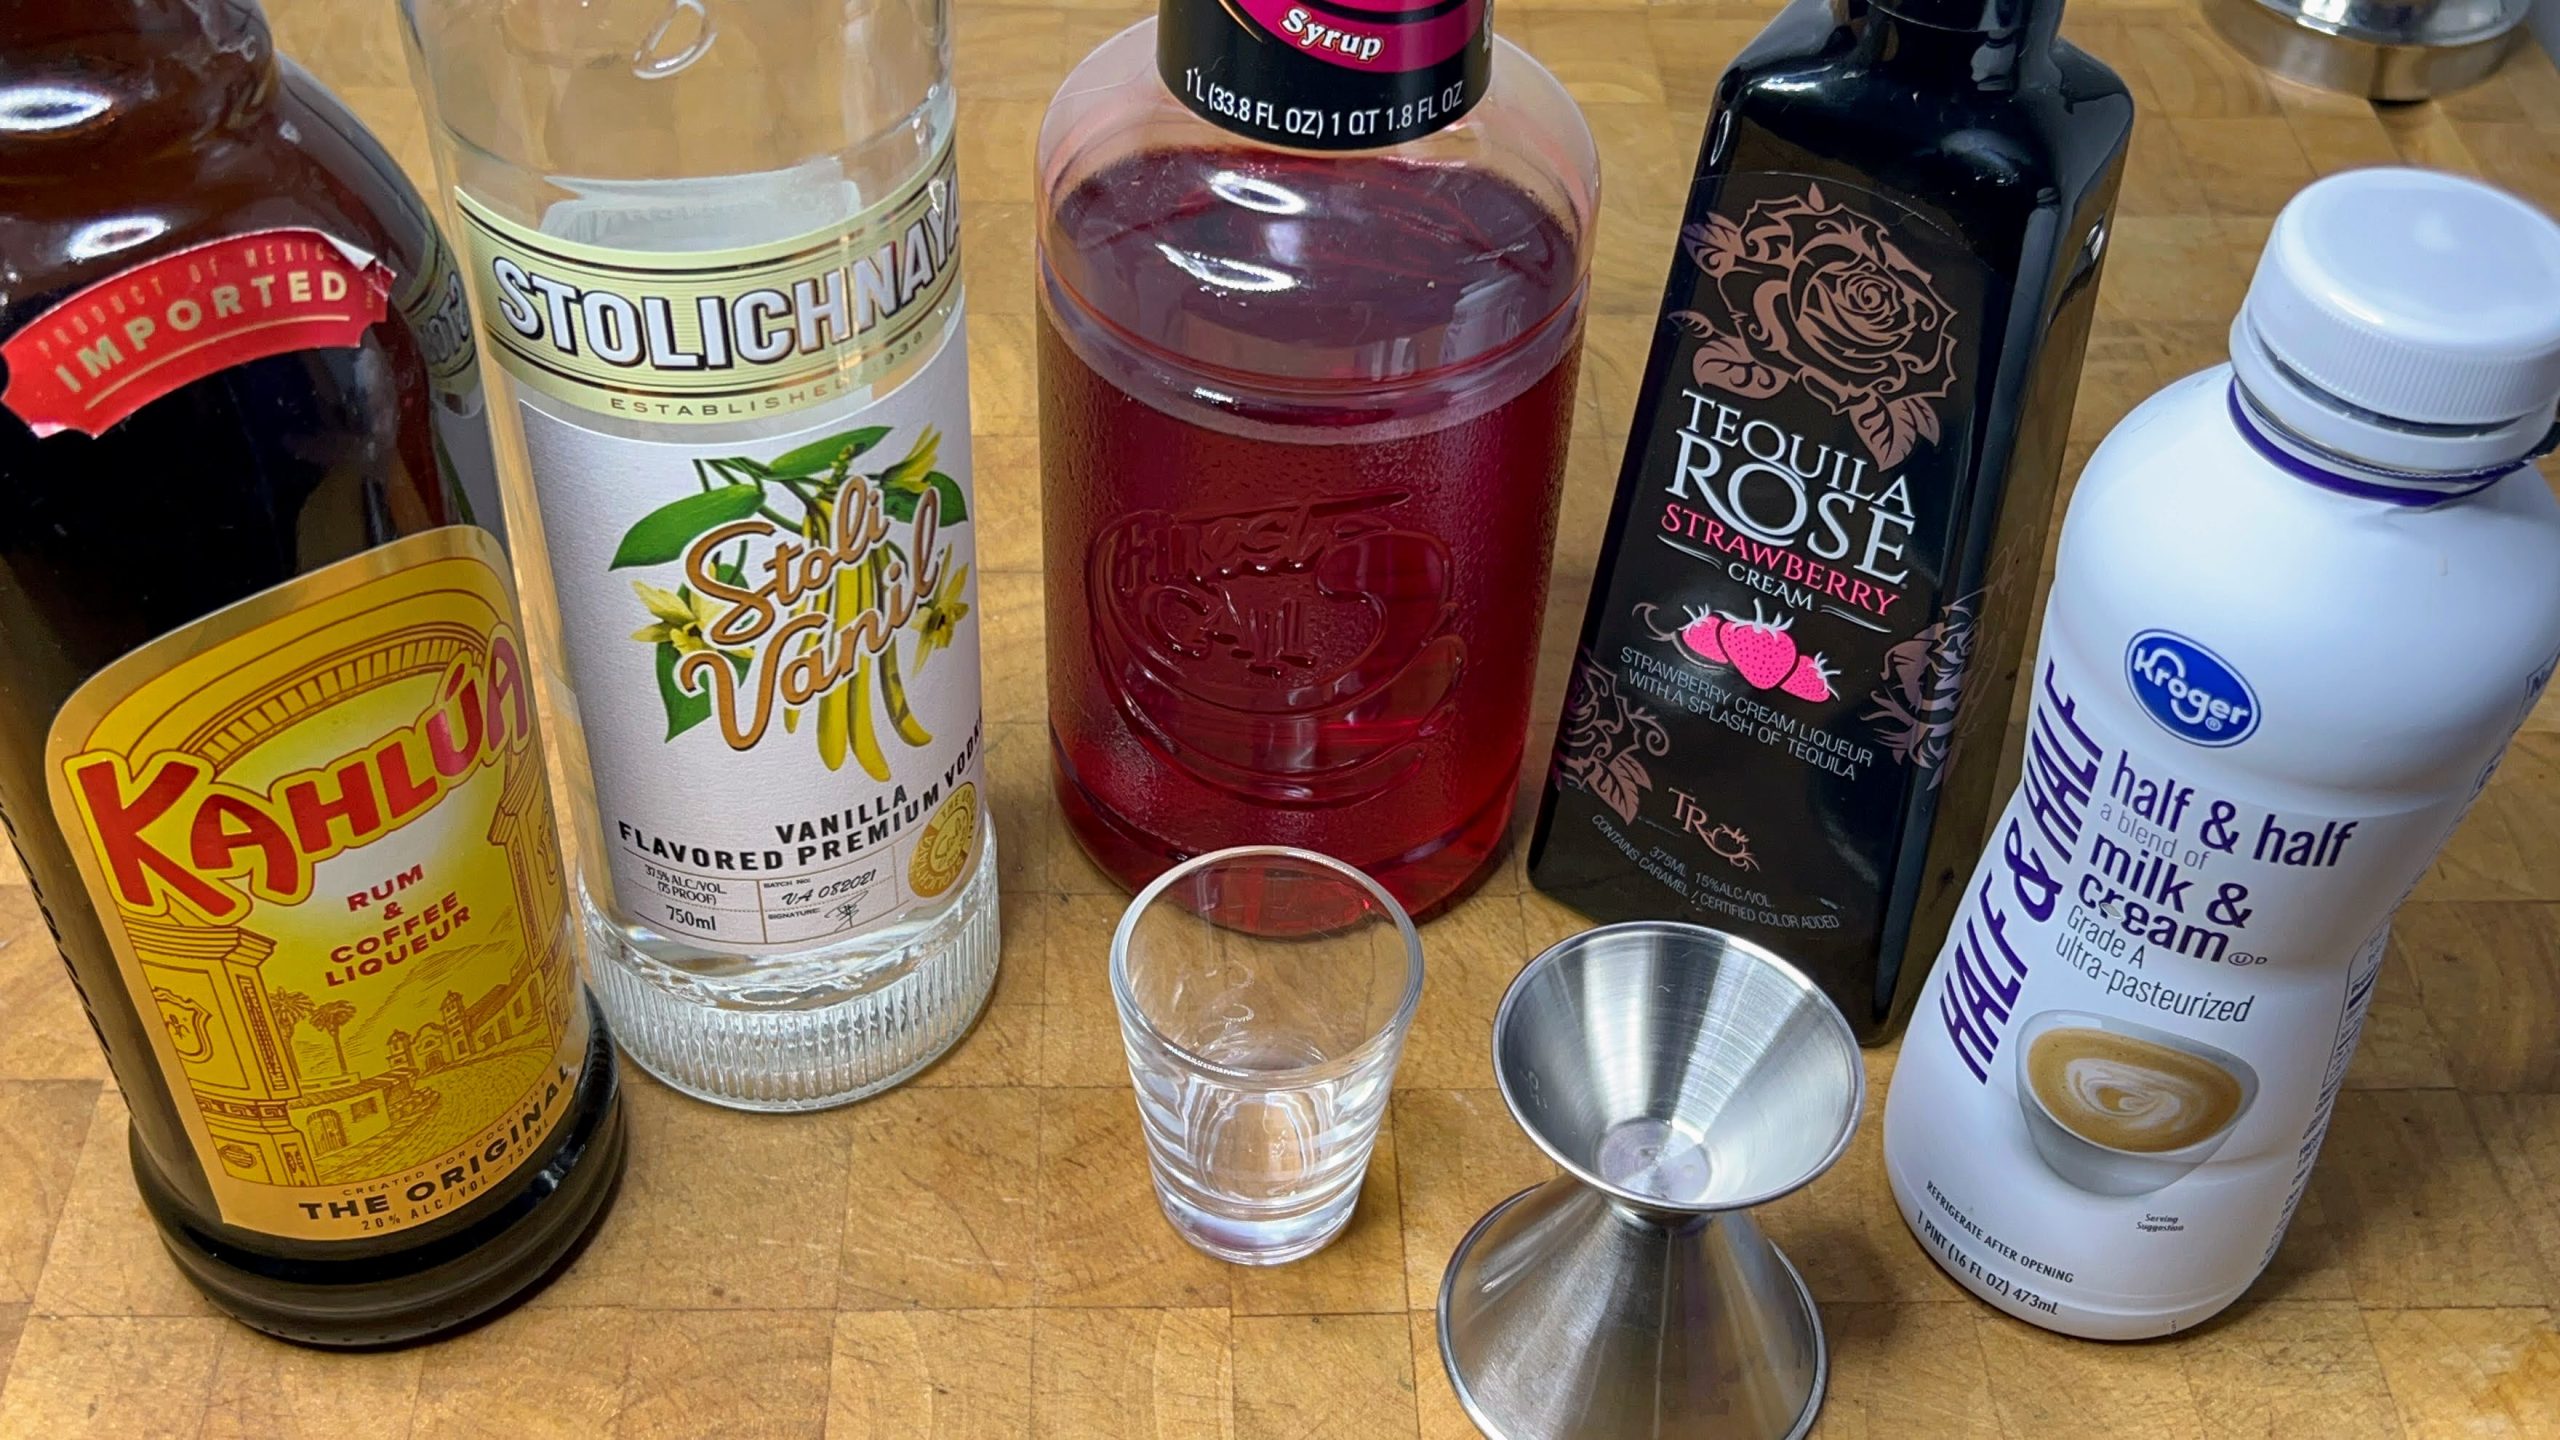 empty shot glass next to a jigger, kahlua, vanilla vodka, grenadine, tequila rose and half and half